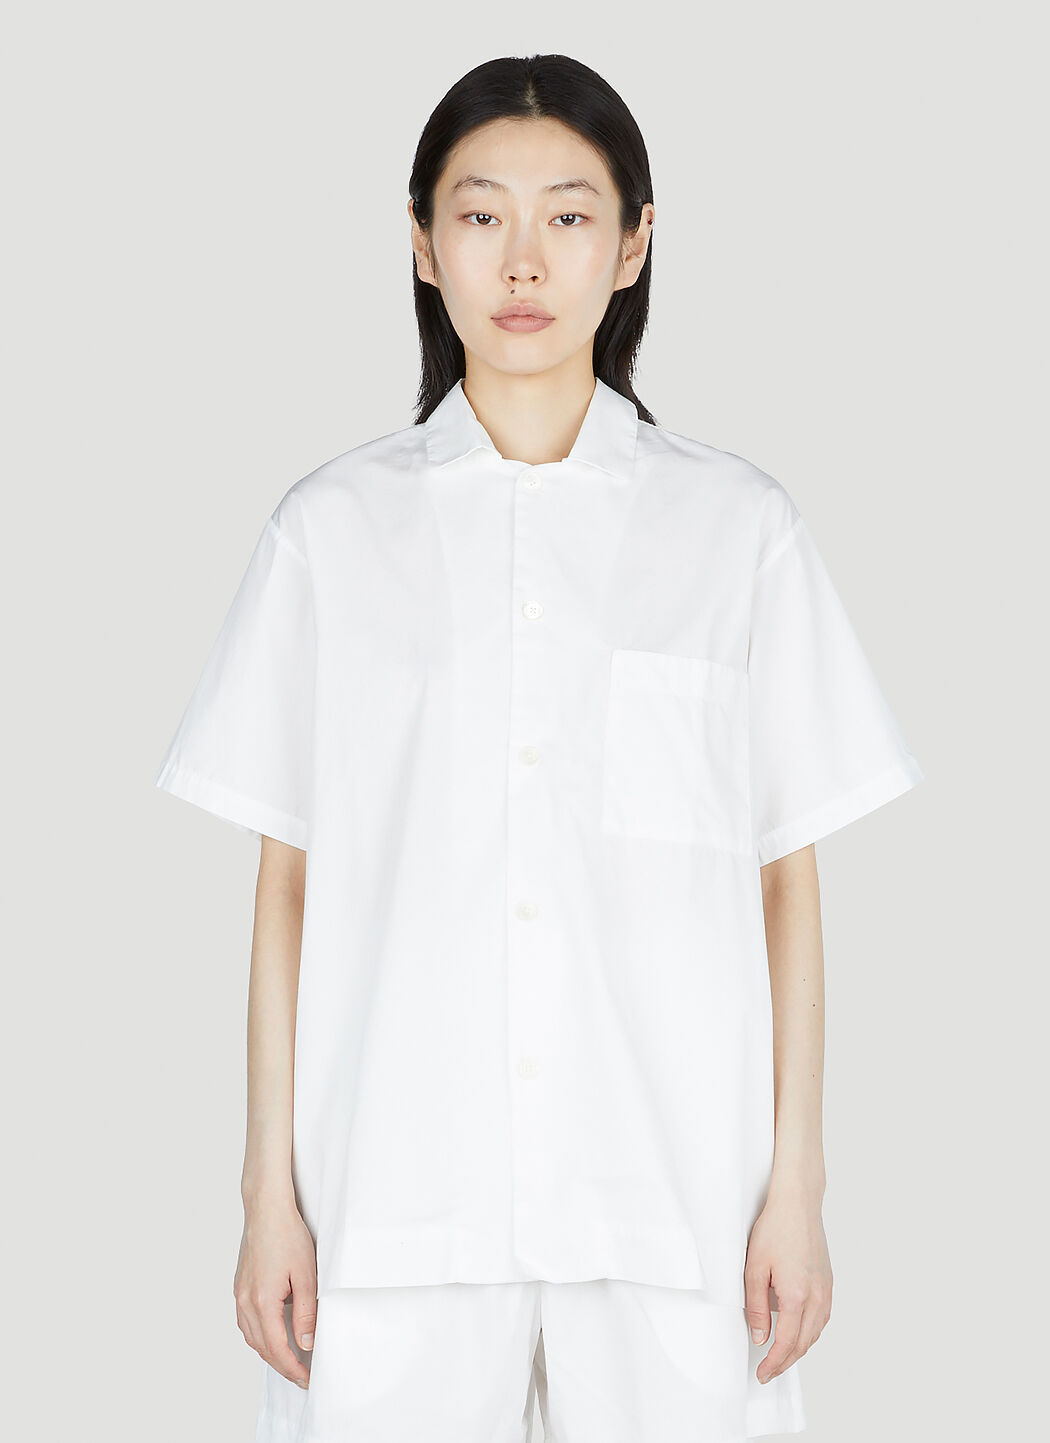 Tekla 经典短袖睡衣衬衫 乳白色 tek0355006